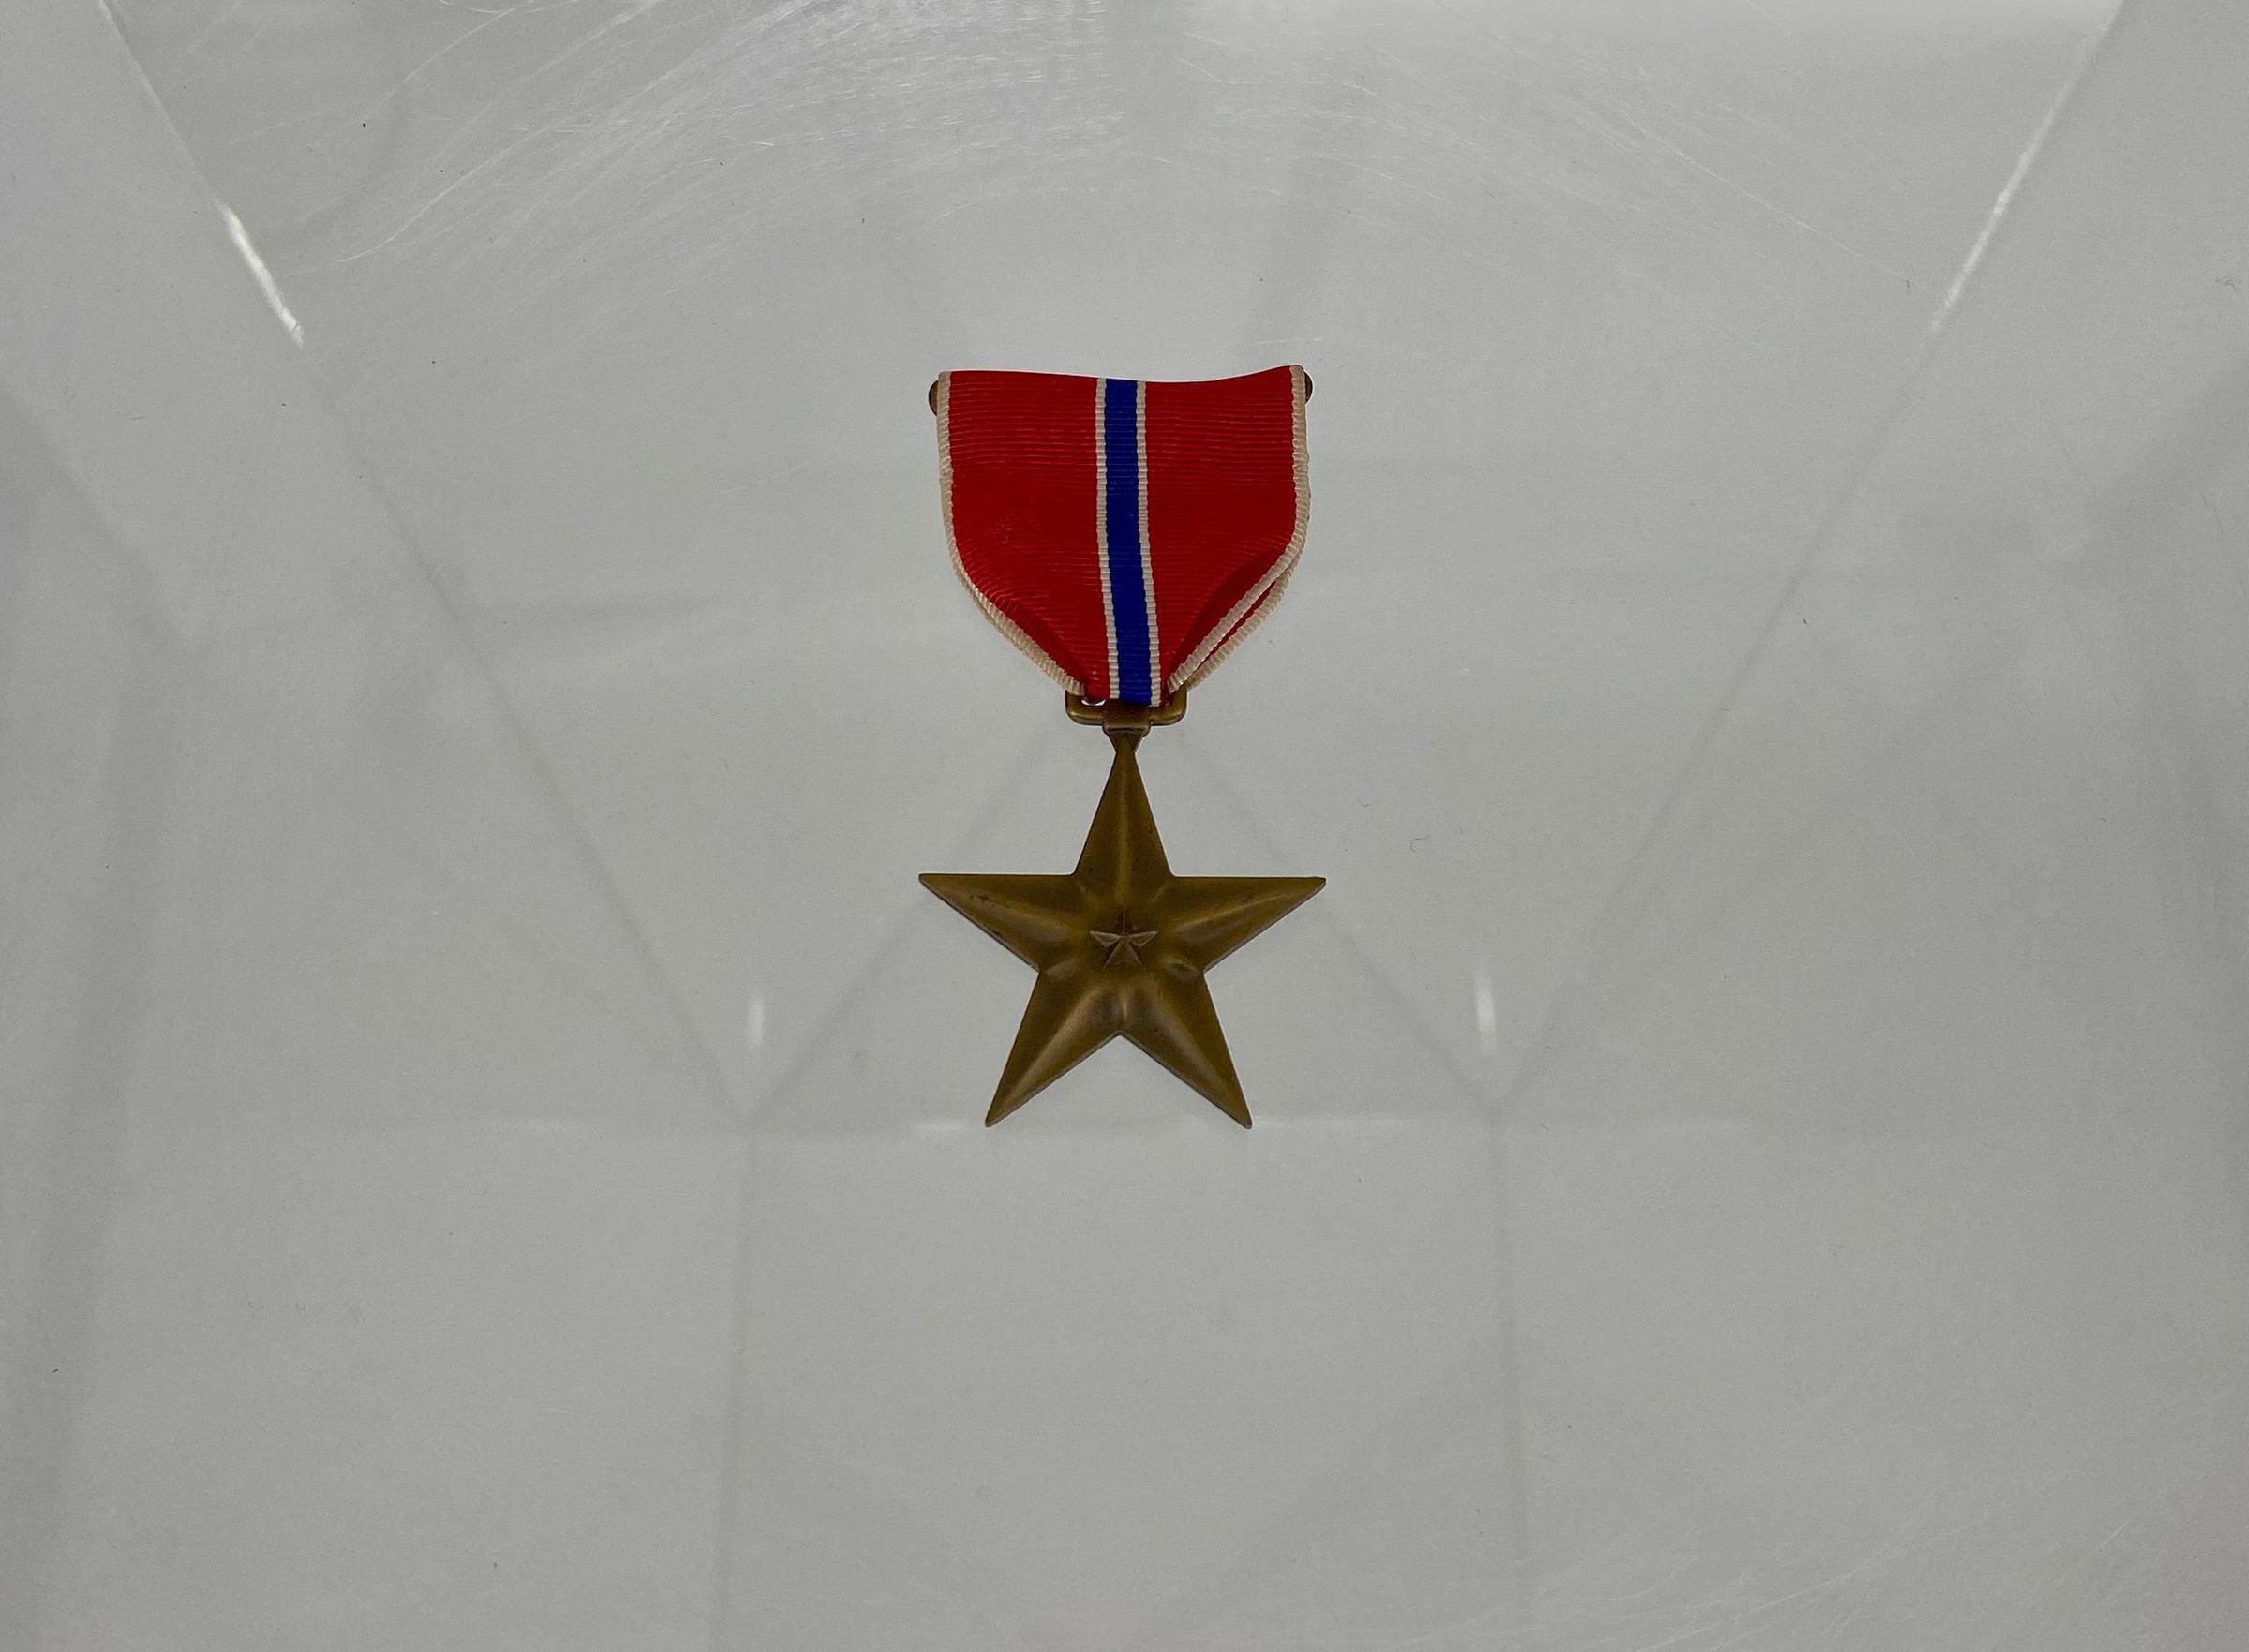 Primary Image of Bronze Star of James H. Flatley, Jr.